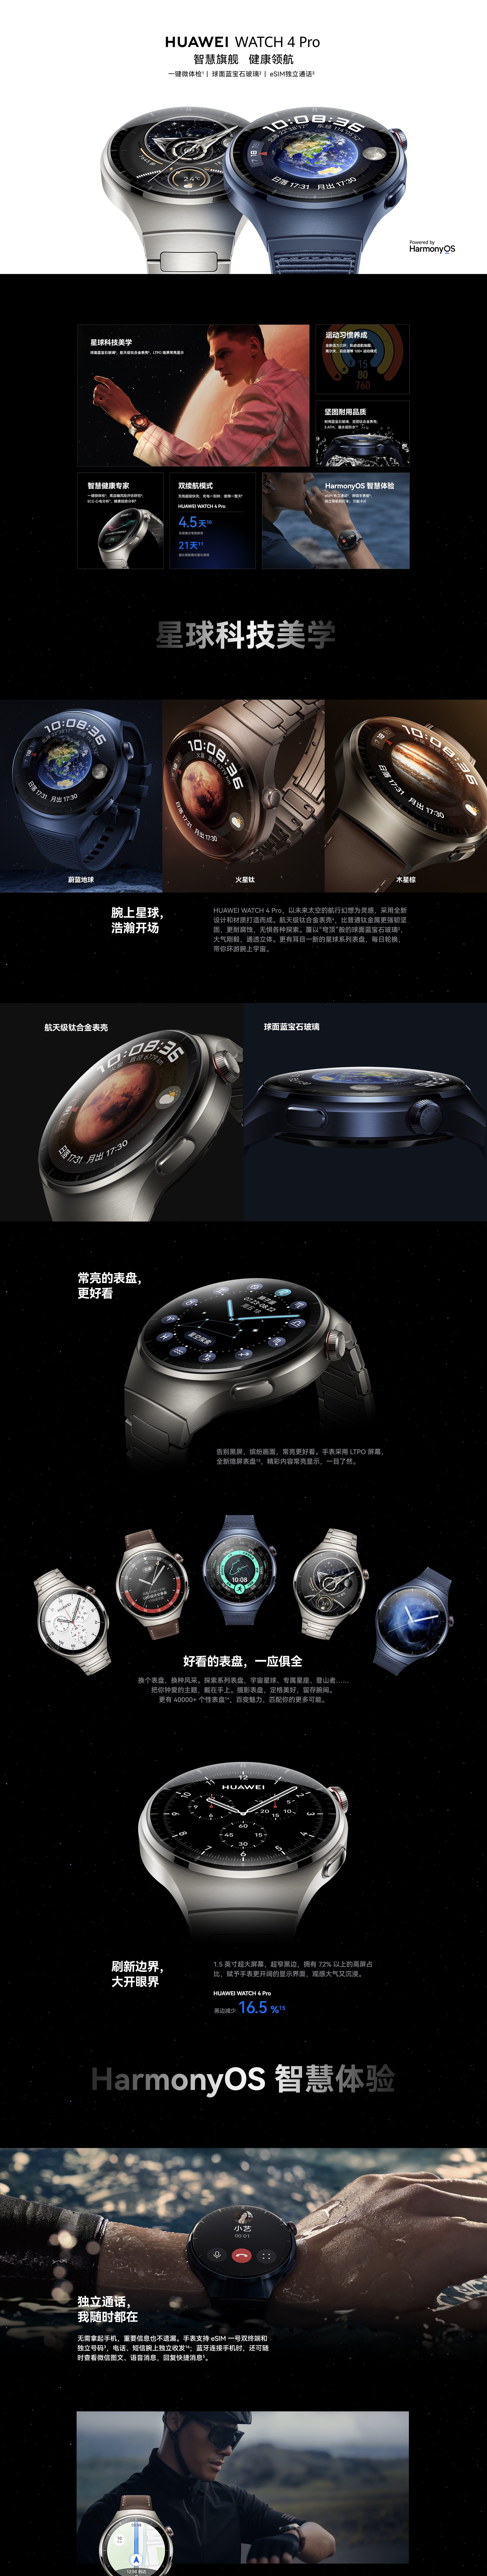 Huawei Watch 4 Pro Smartwatch HarmonyOS